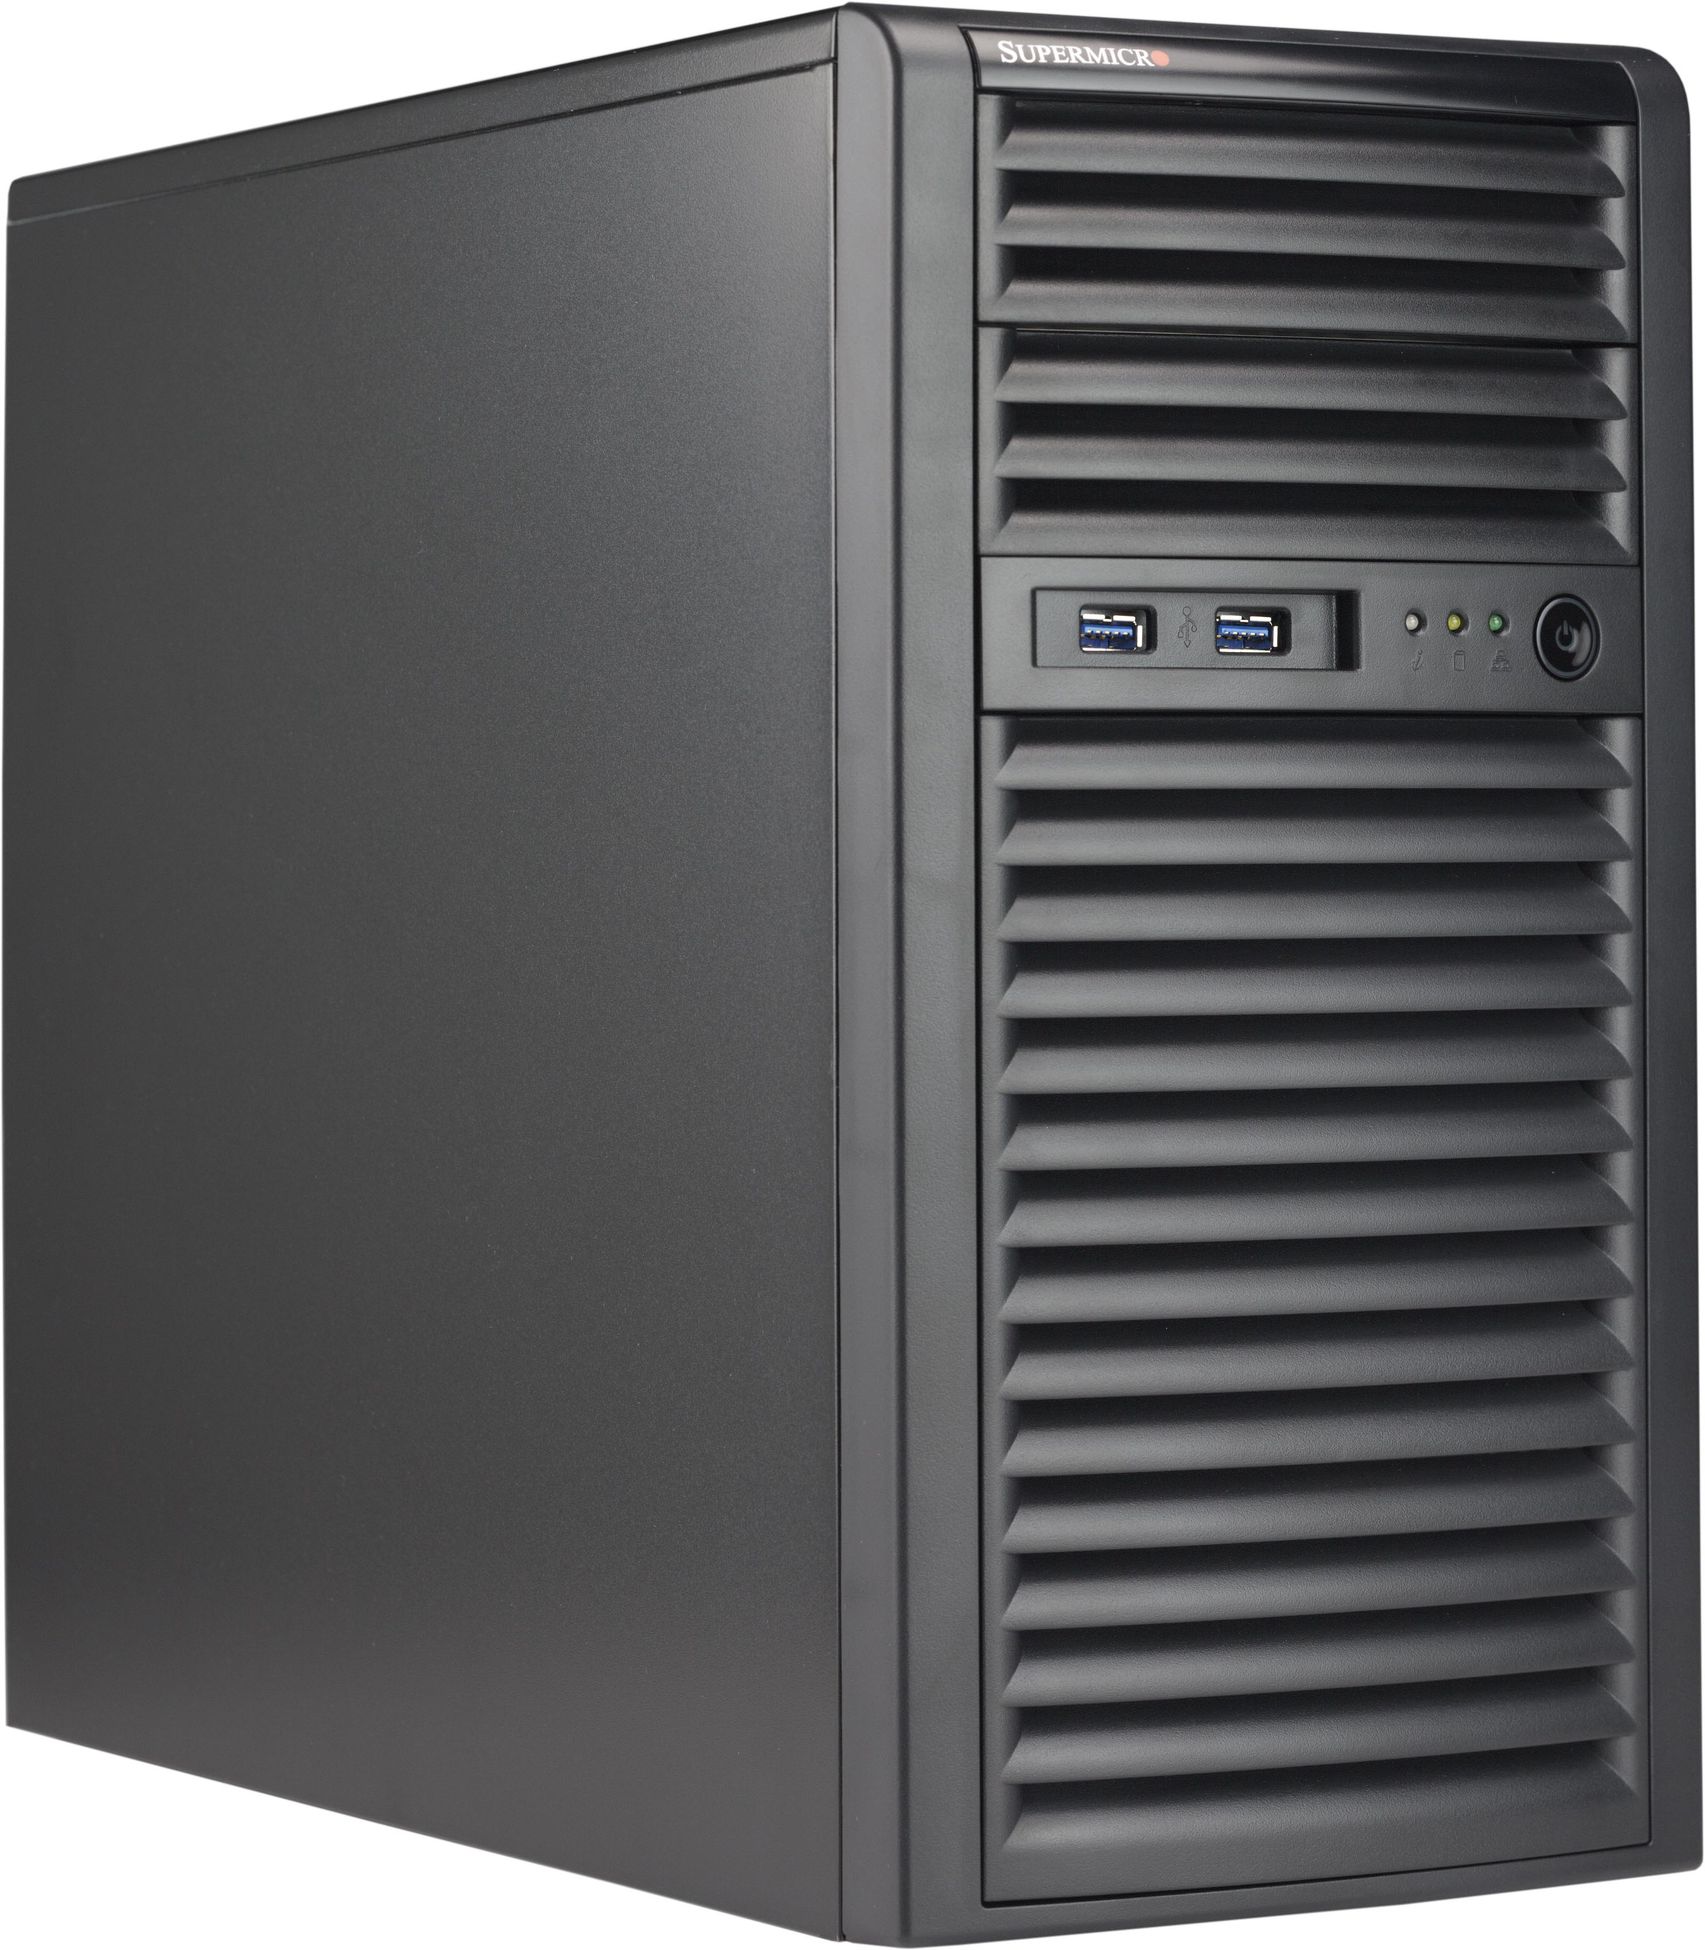 Подробное фото Сервер Supermicro 5039D Xeon E3-1230v6 32Gb 2133P DDR4 4x noHDD 3.5" SATA , RAID C232 , PSU 300W